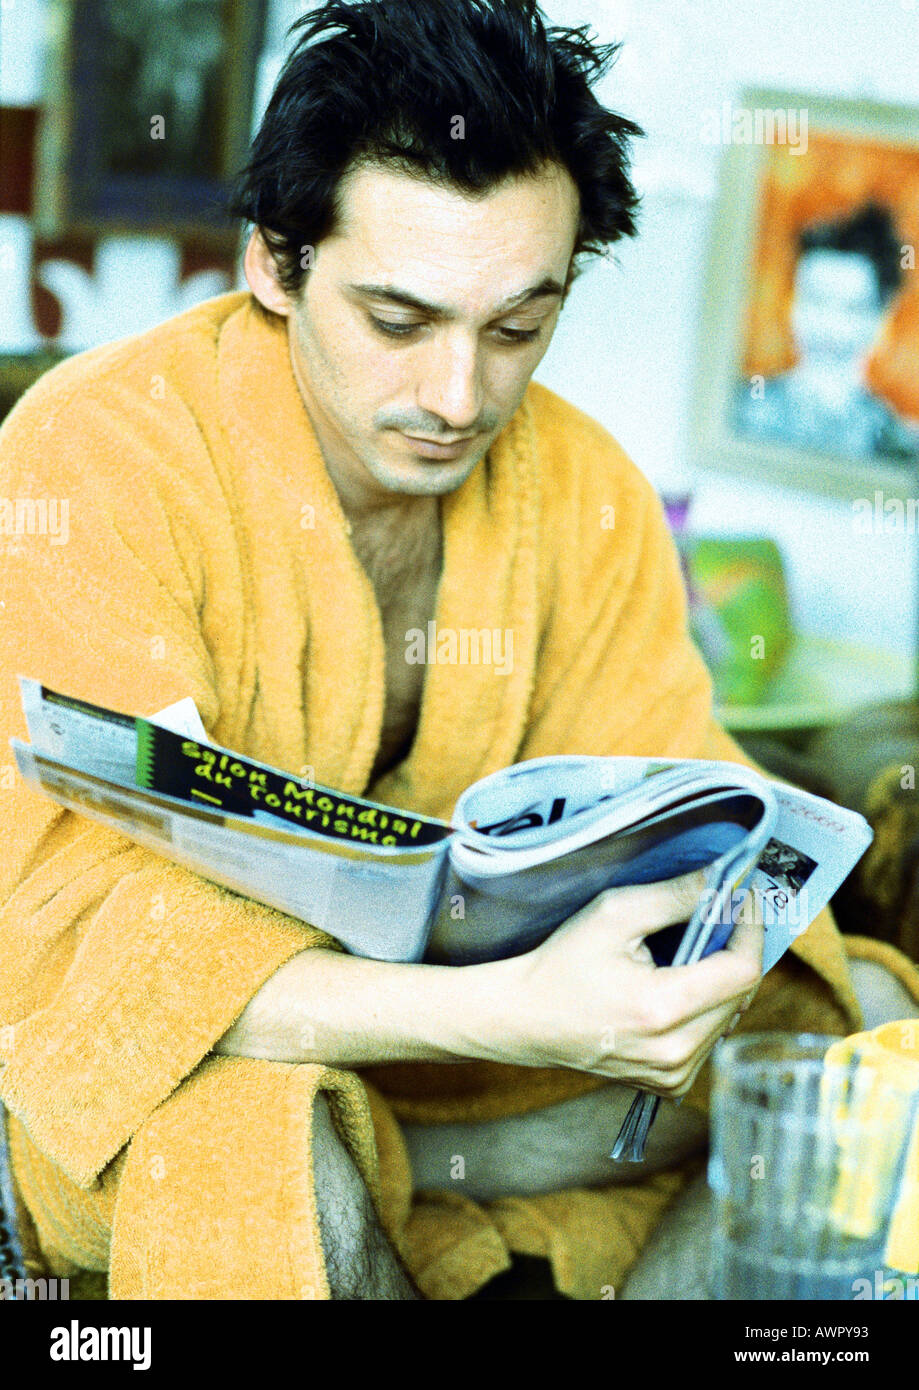 Man reading magazine, portrait. Stock Photo